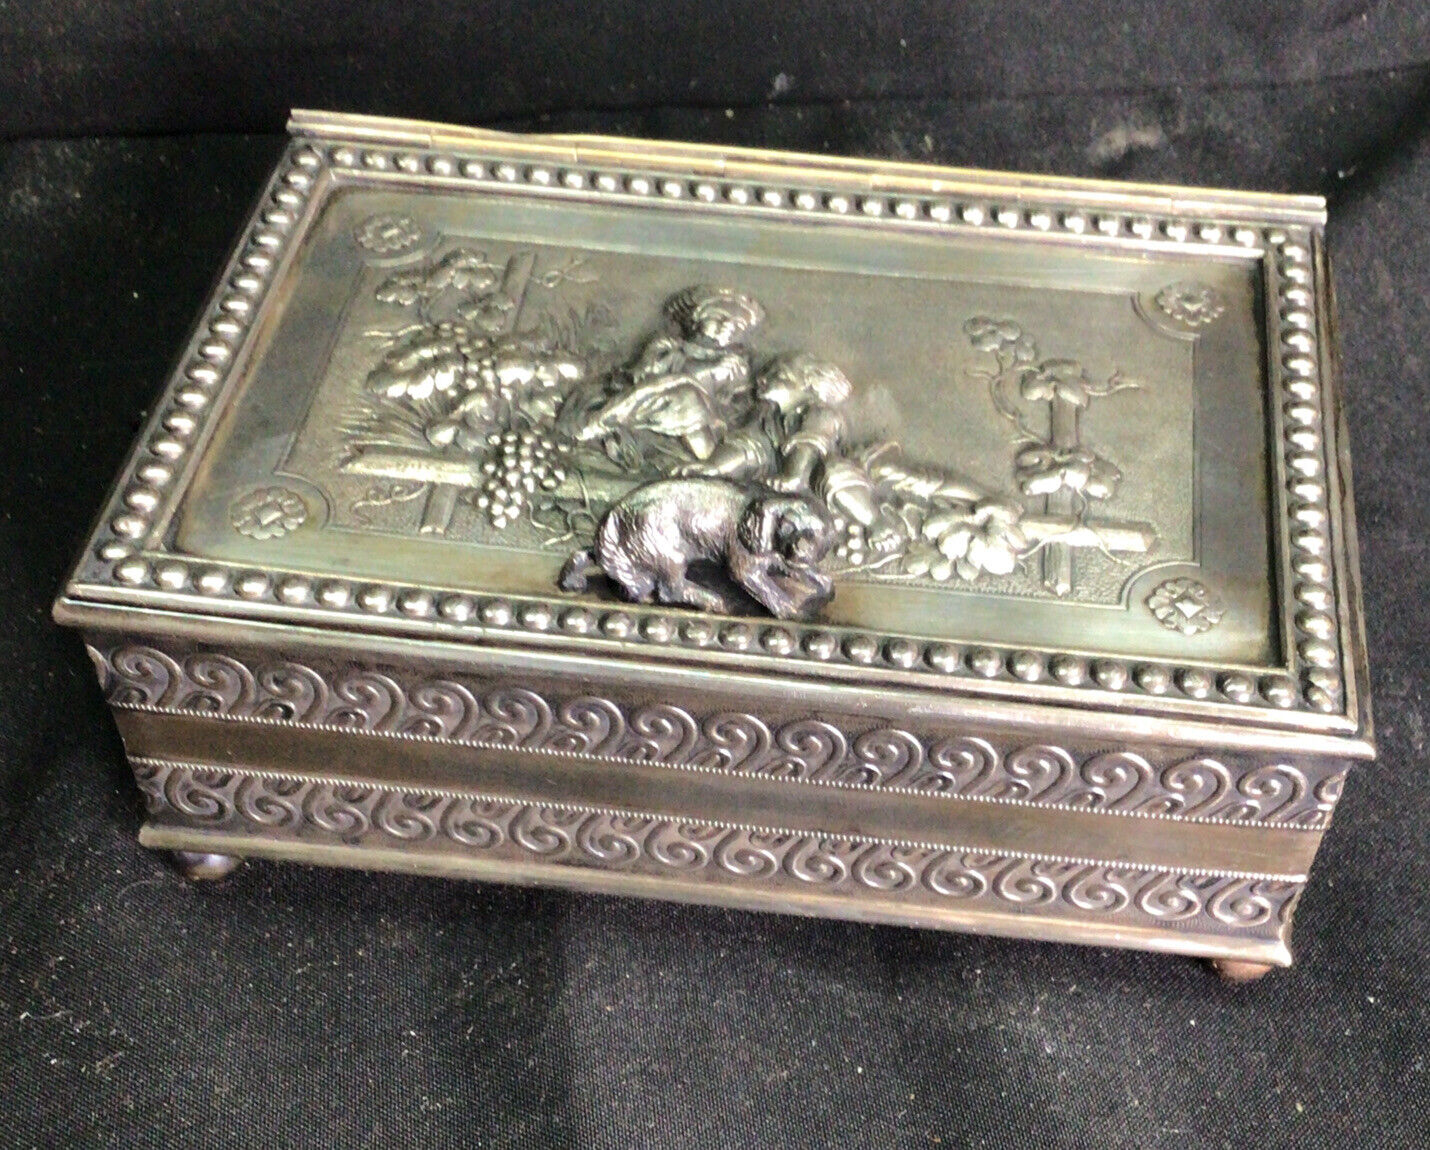 Super  james tufts cherubs dog figural Victorian Jewelry Casket Box silverplate